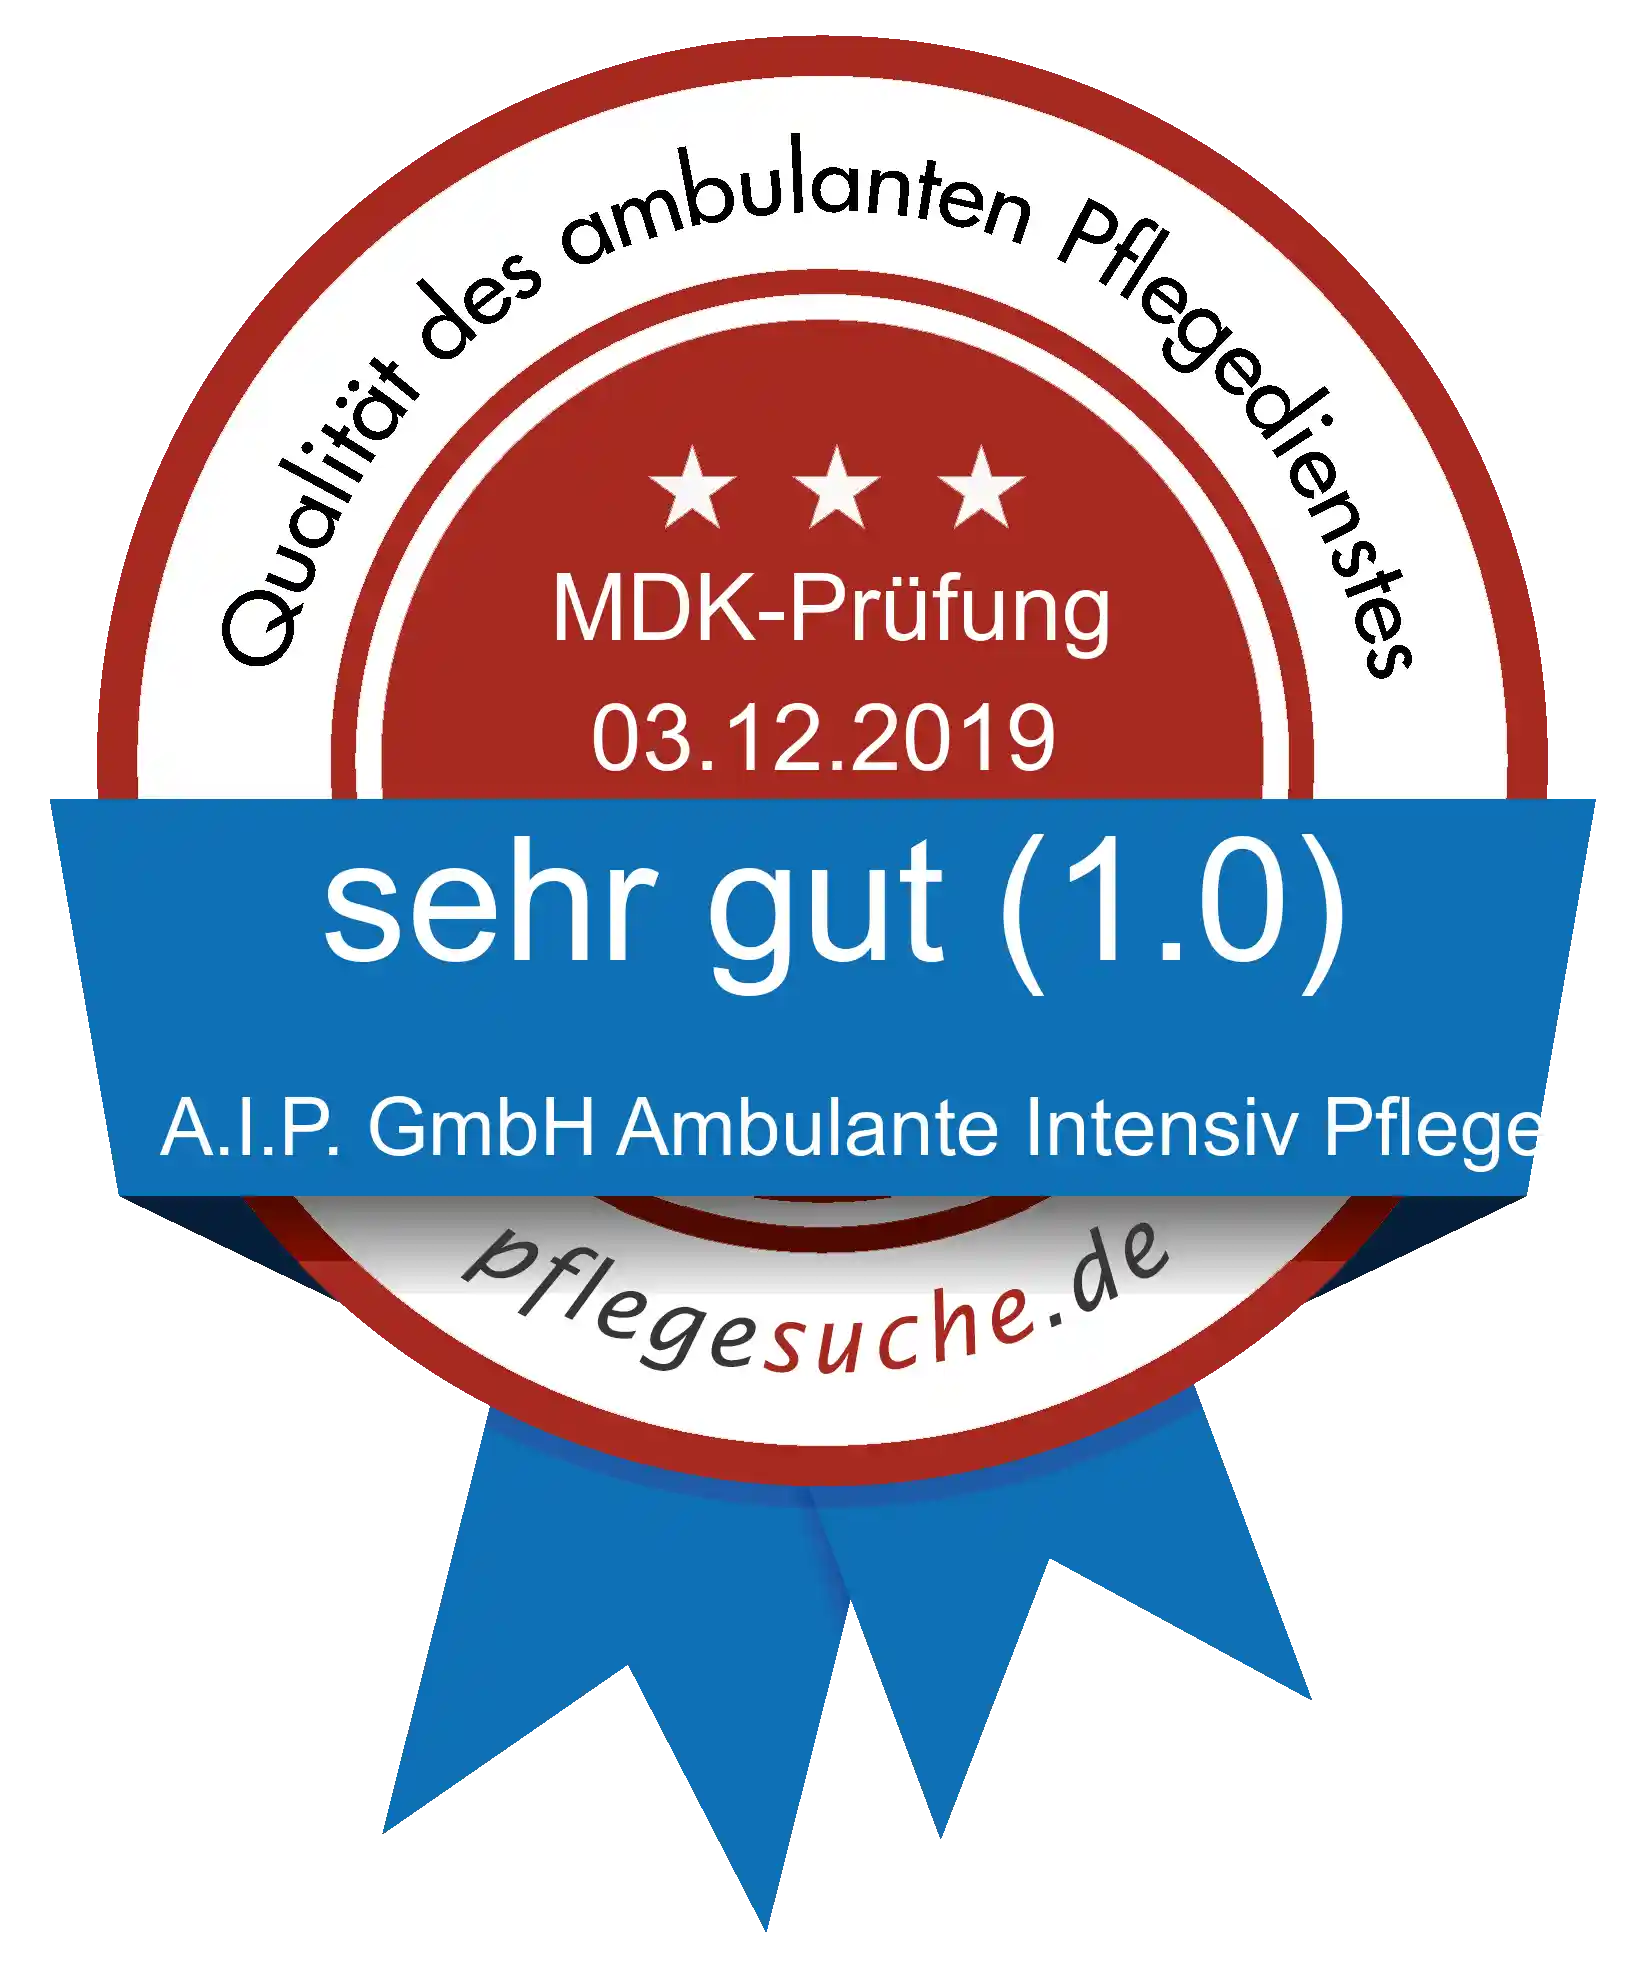 Siegel Benotung: A.I.P. GmbH Ambulante Intensiv Pflege